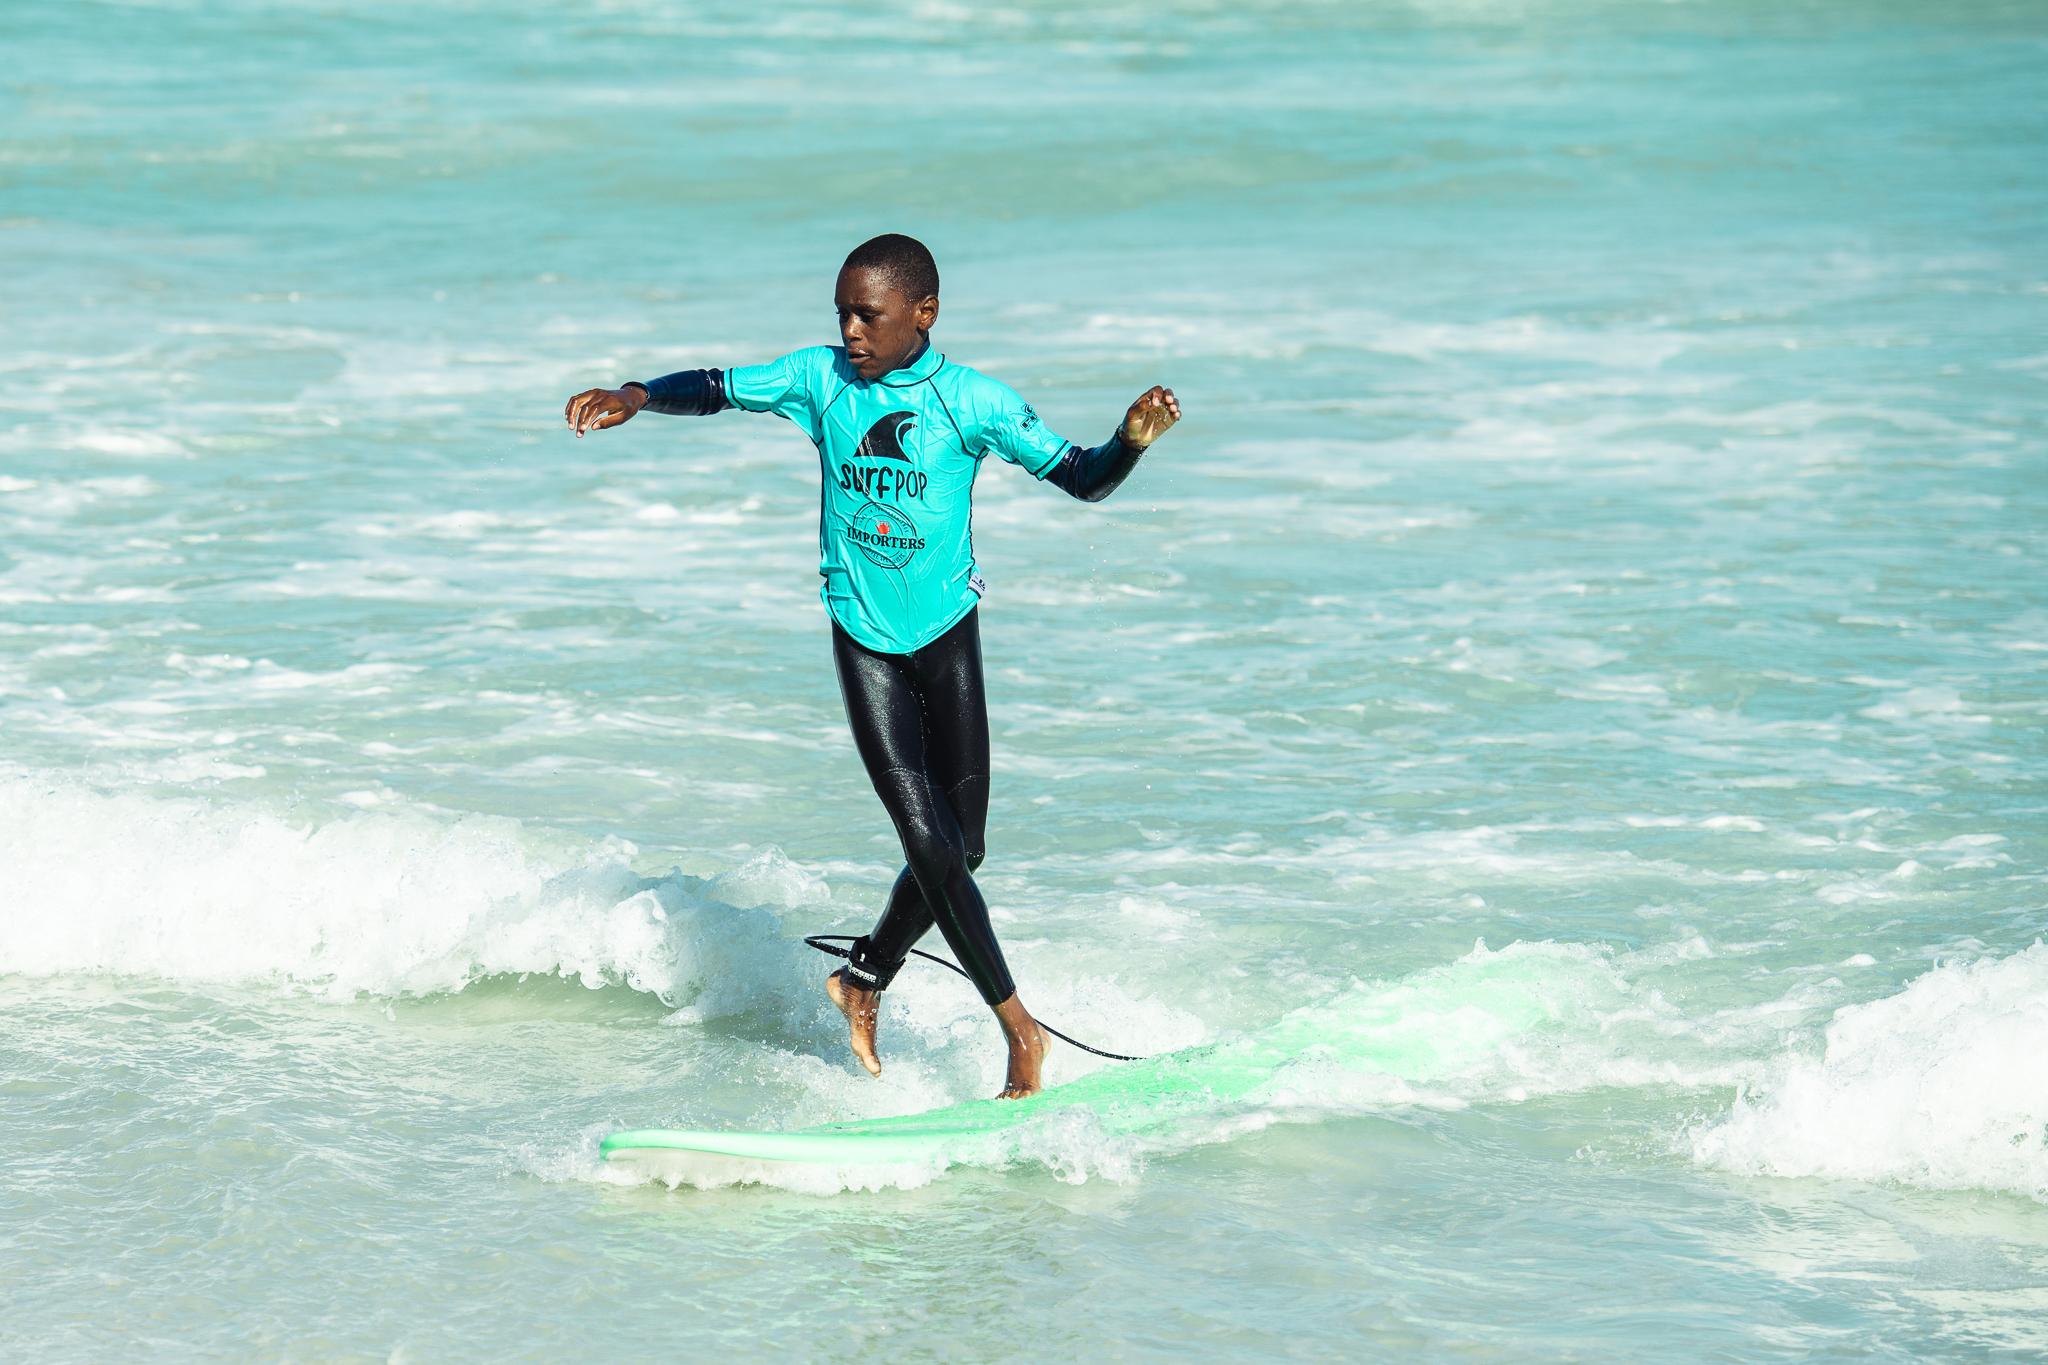 Surfpop, South Africa